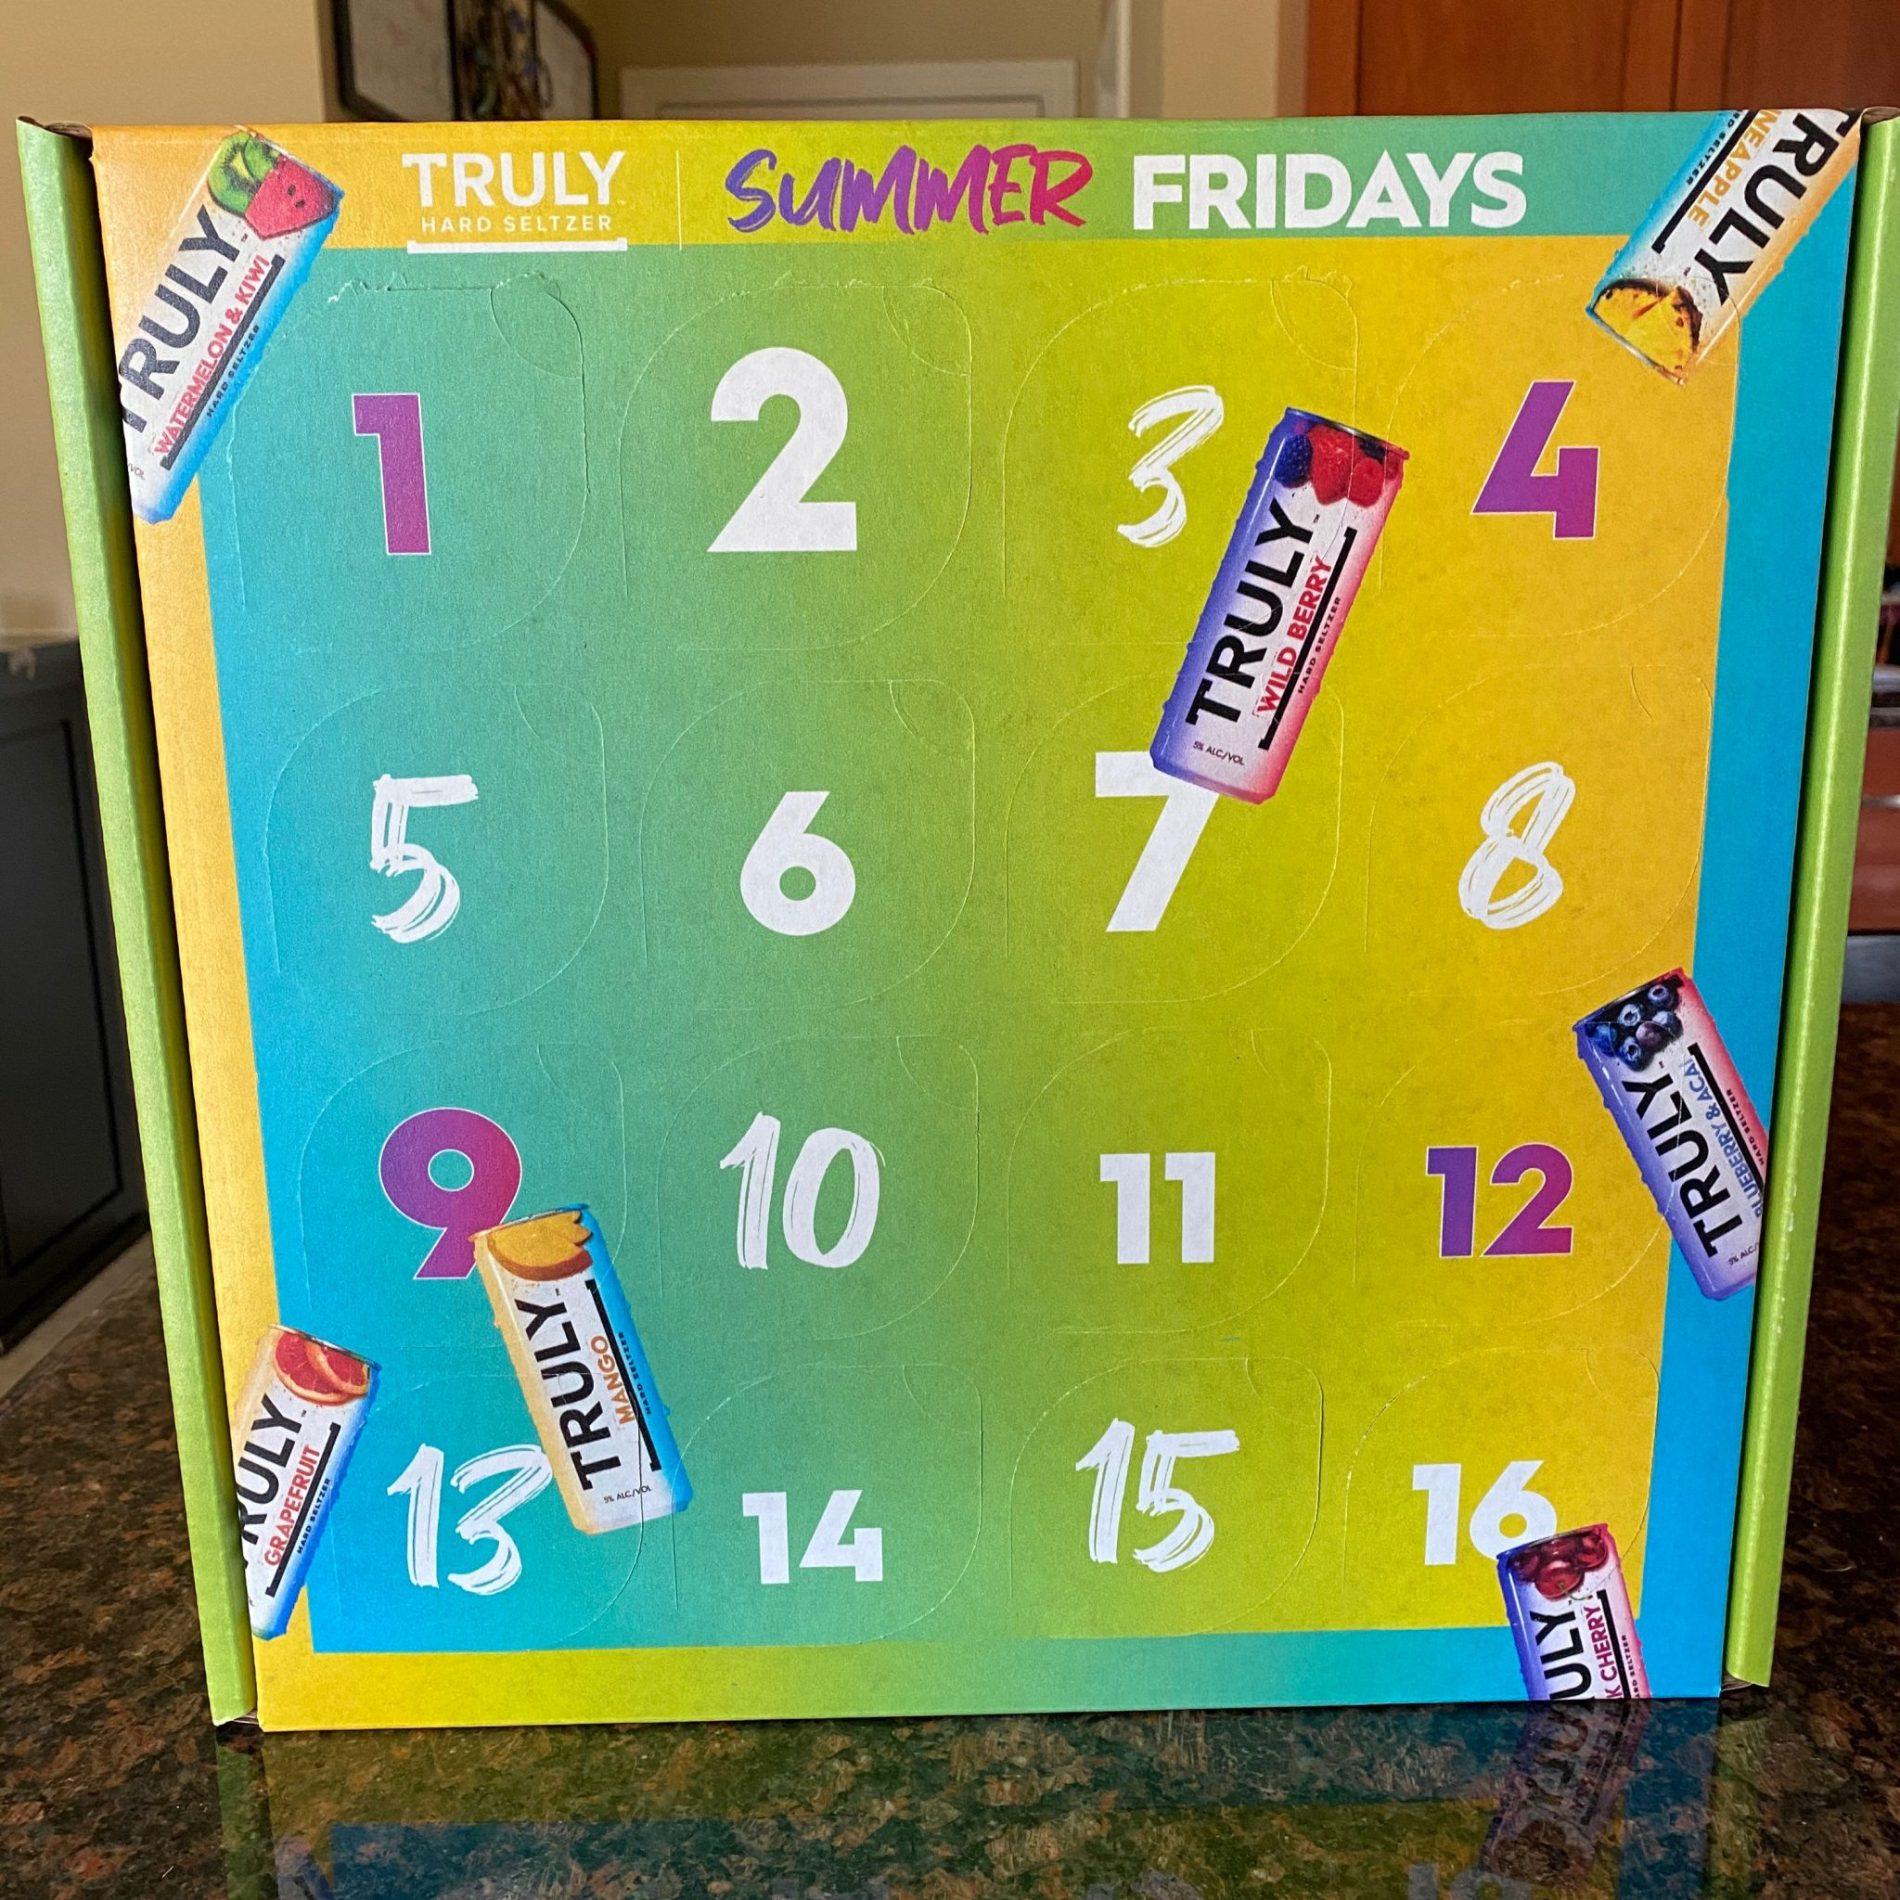 Truly Summer Fridays Advent Calendar Review Subscription Box Ramblings